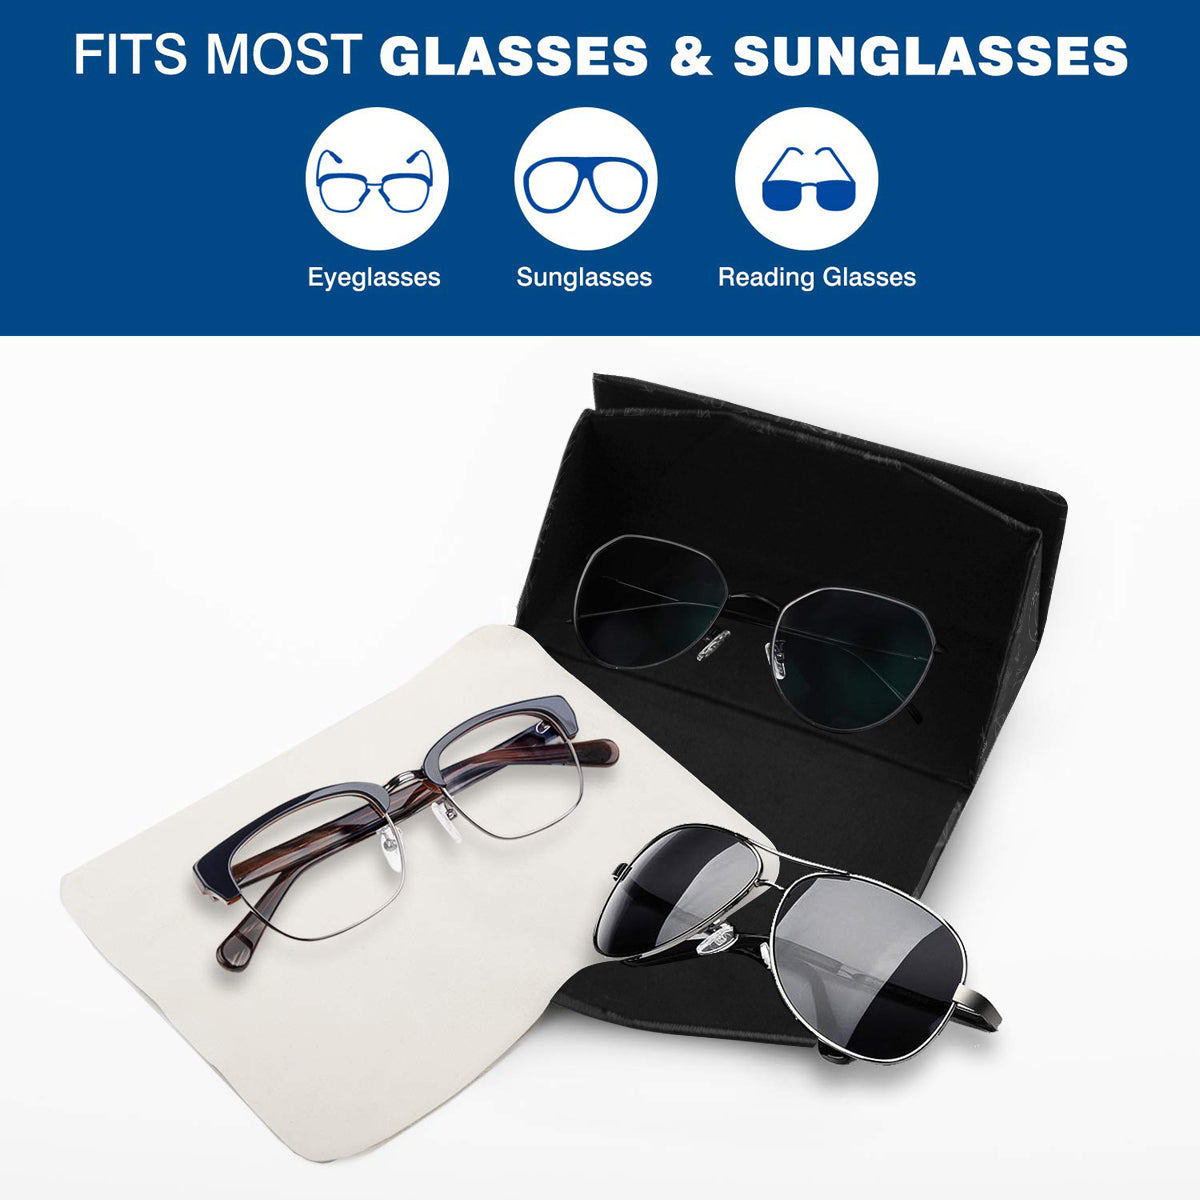 The Sigil of Baphomet Foldable Glasses Case